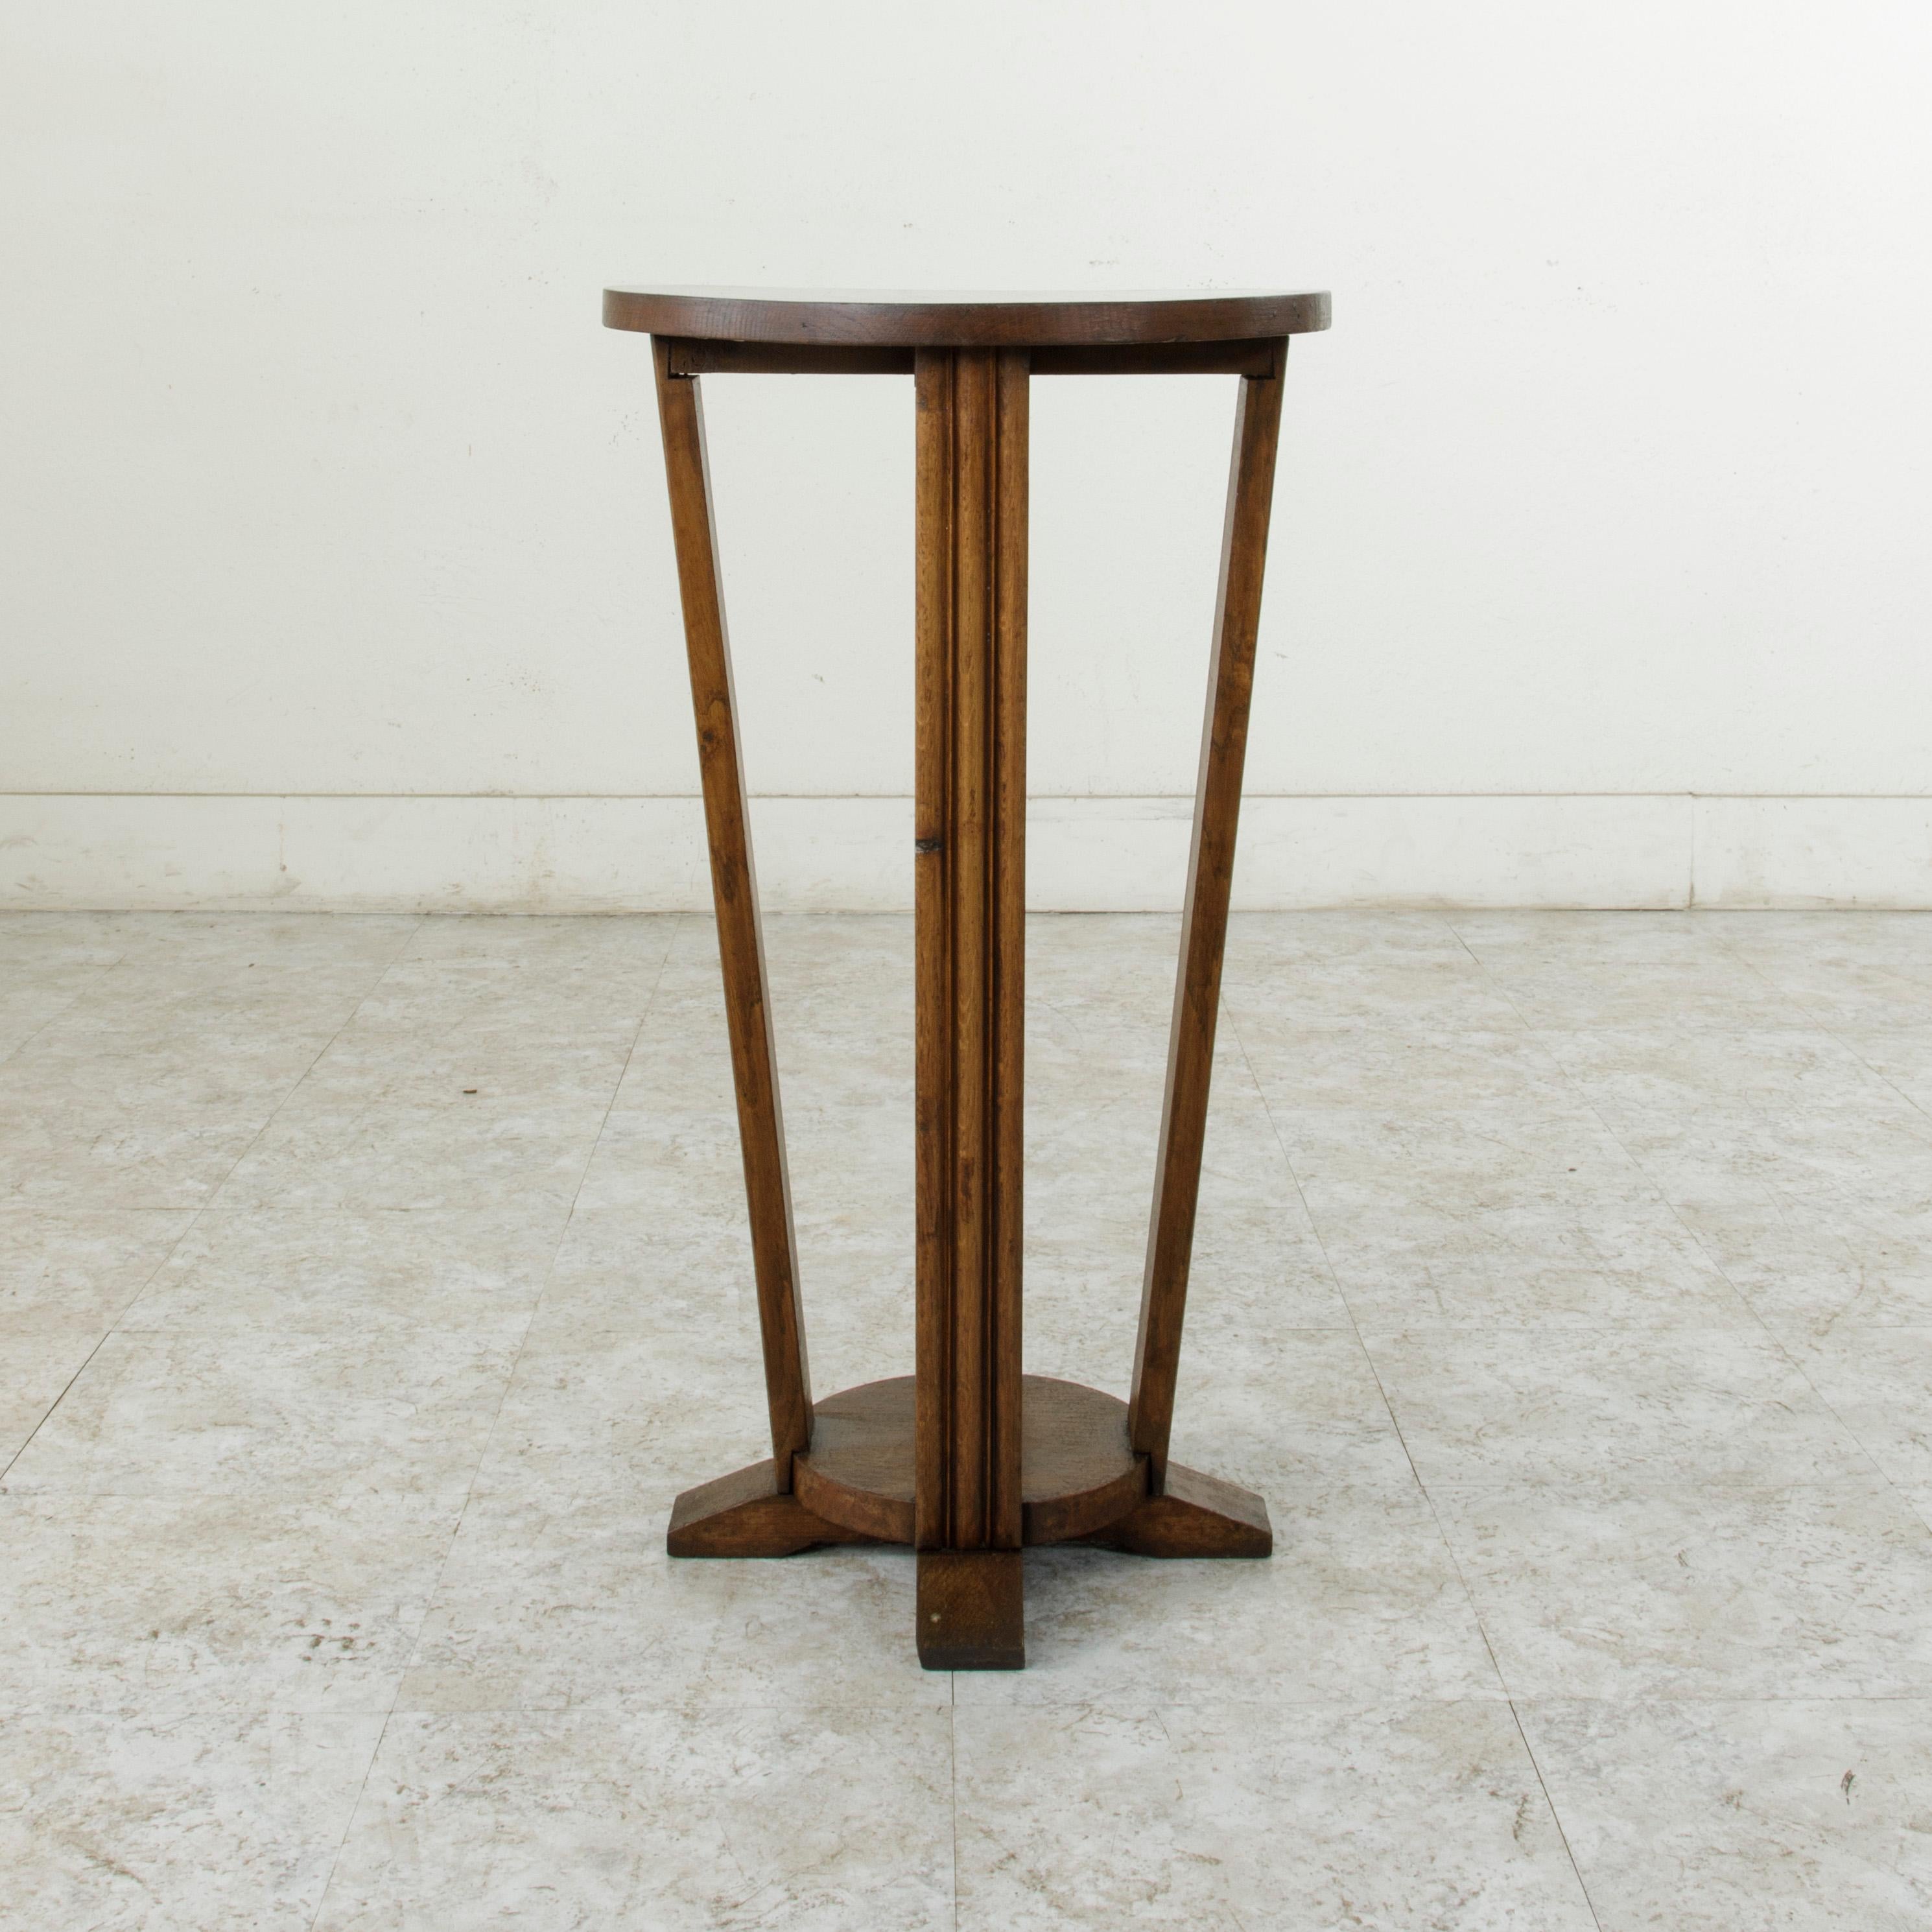 Early 20th Century French Art Deco Period Oak Pedestal, Side Table, Fern Stand (Französisch)